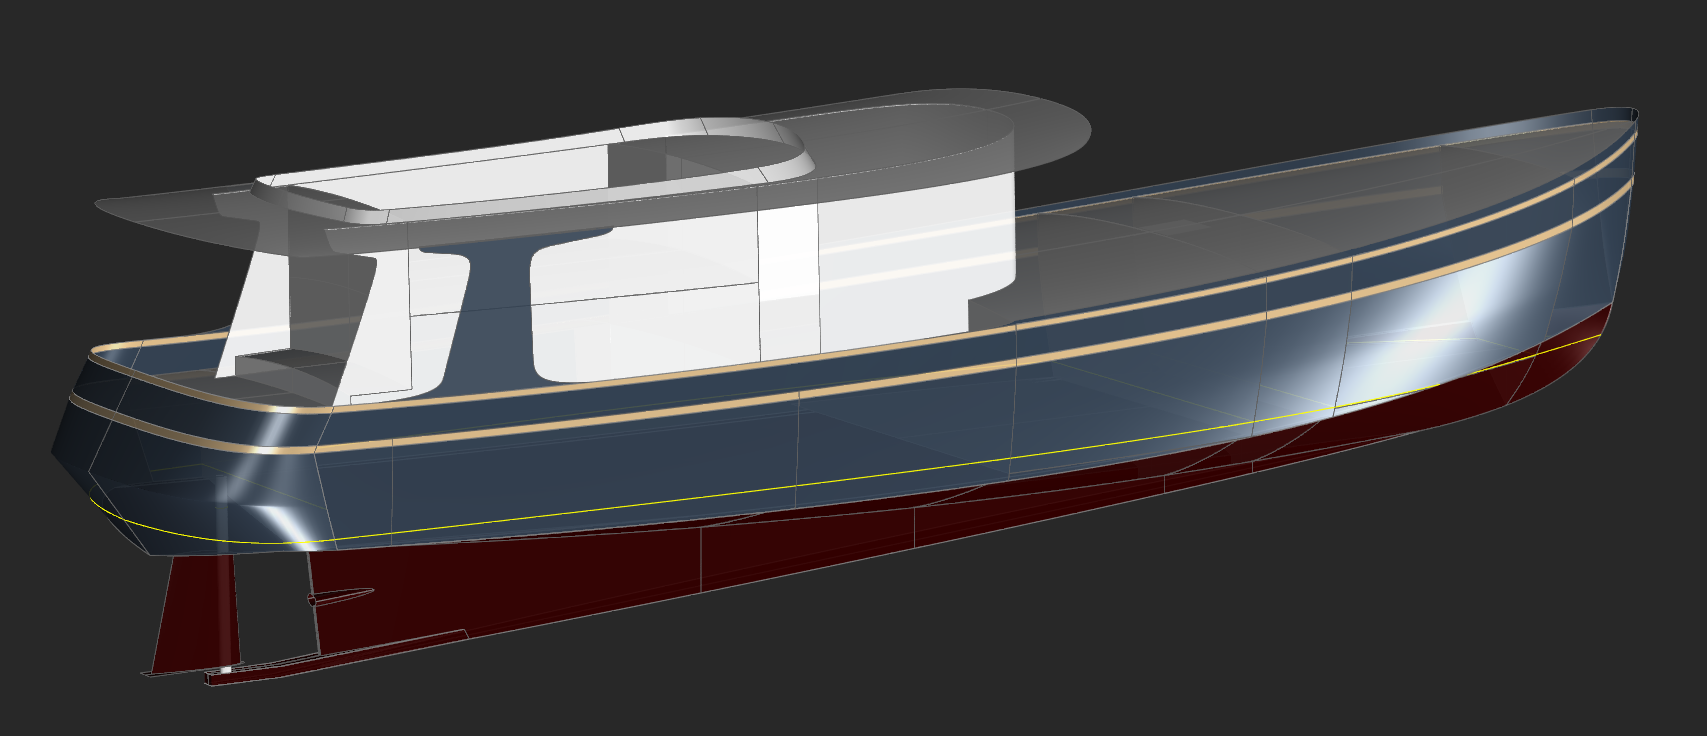 The 70' Fast Aluminum Trawler Yacht - OCEAN EXPRESS - Kasten Marine Design, Inc.